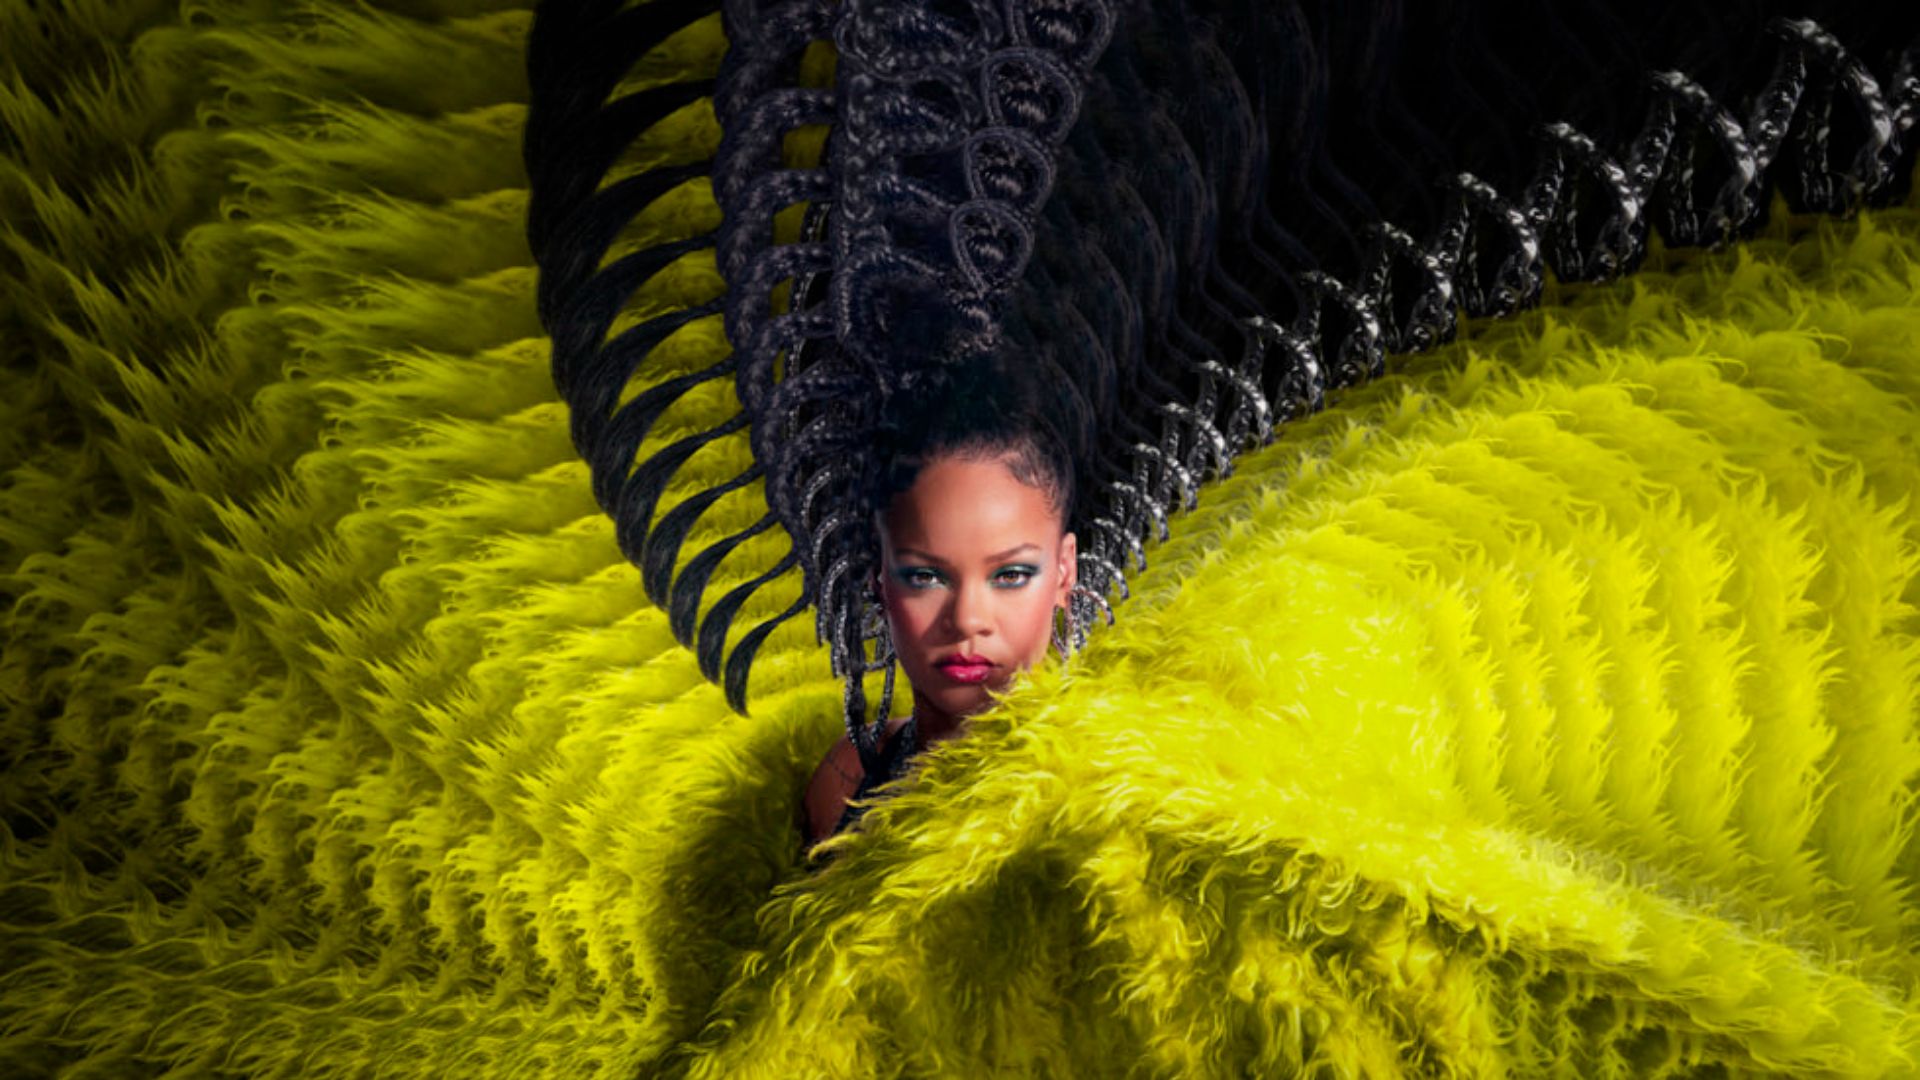 Apple Music Rihanna in a big yellow dress